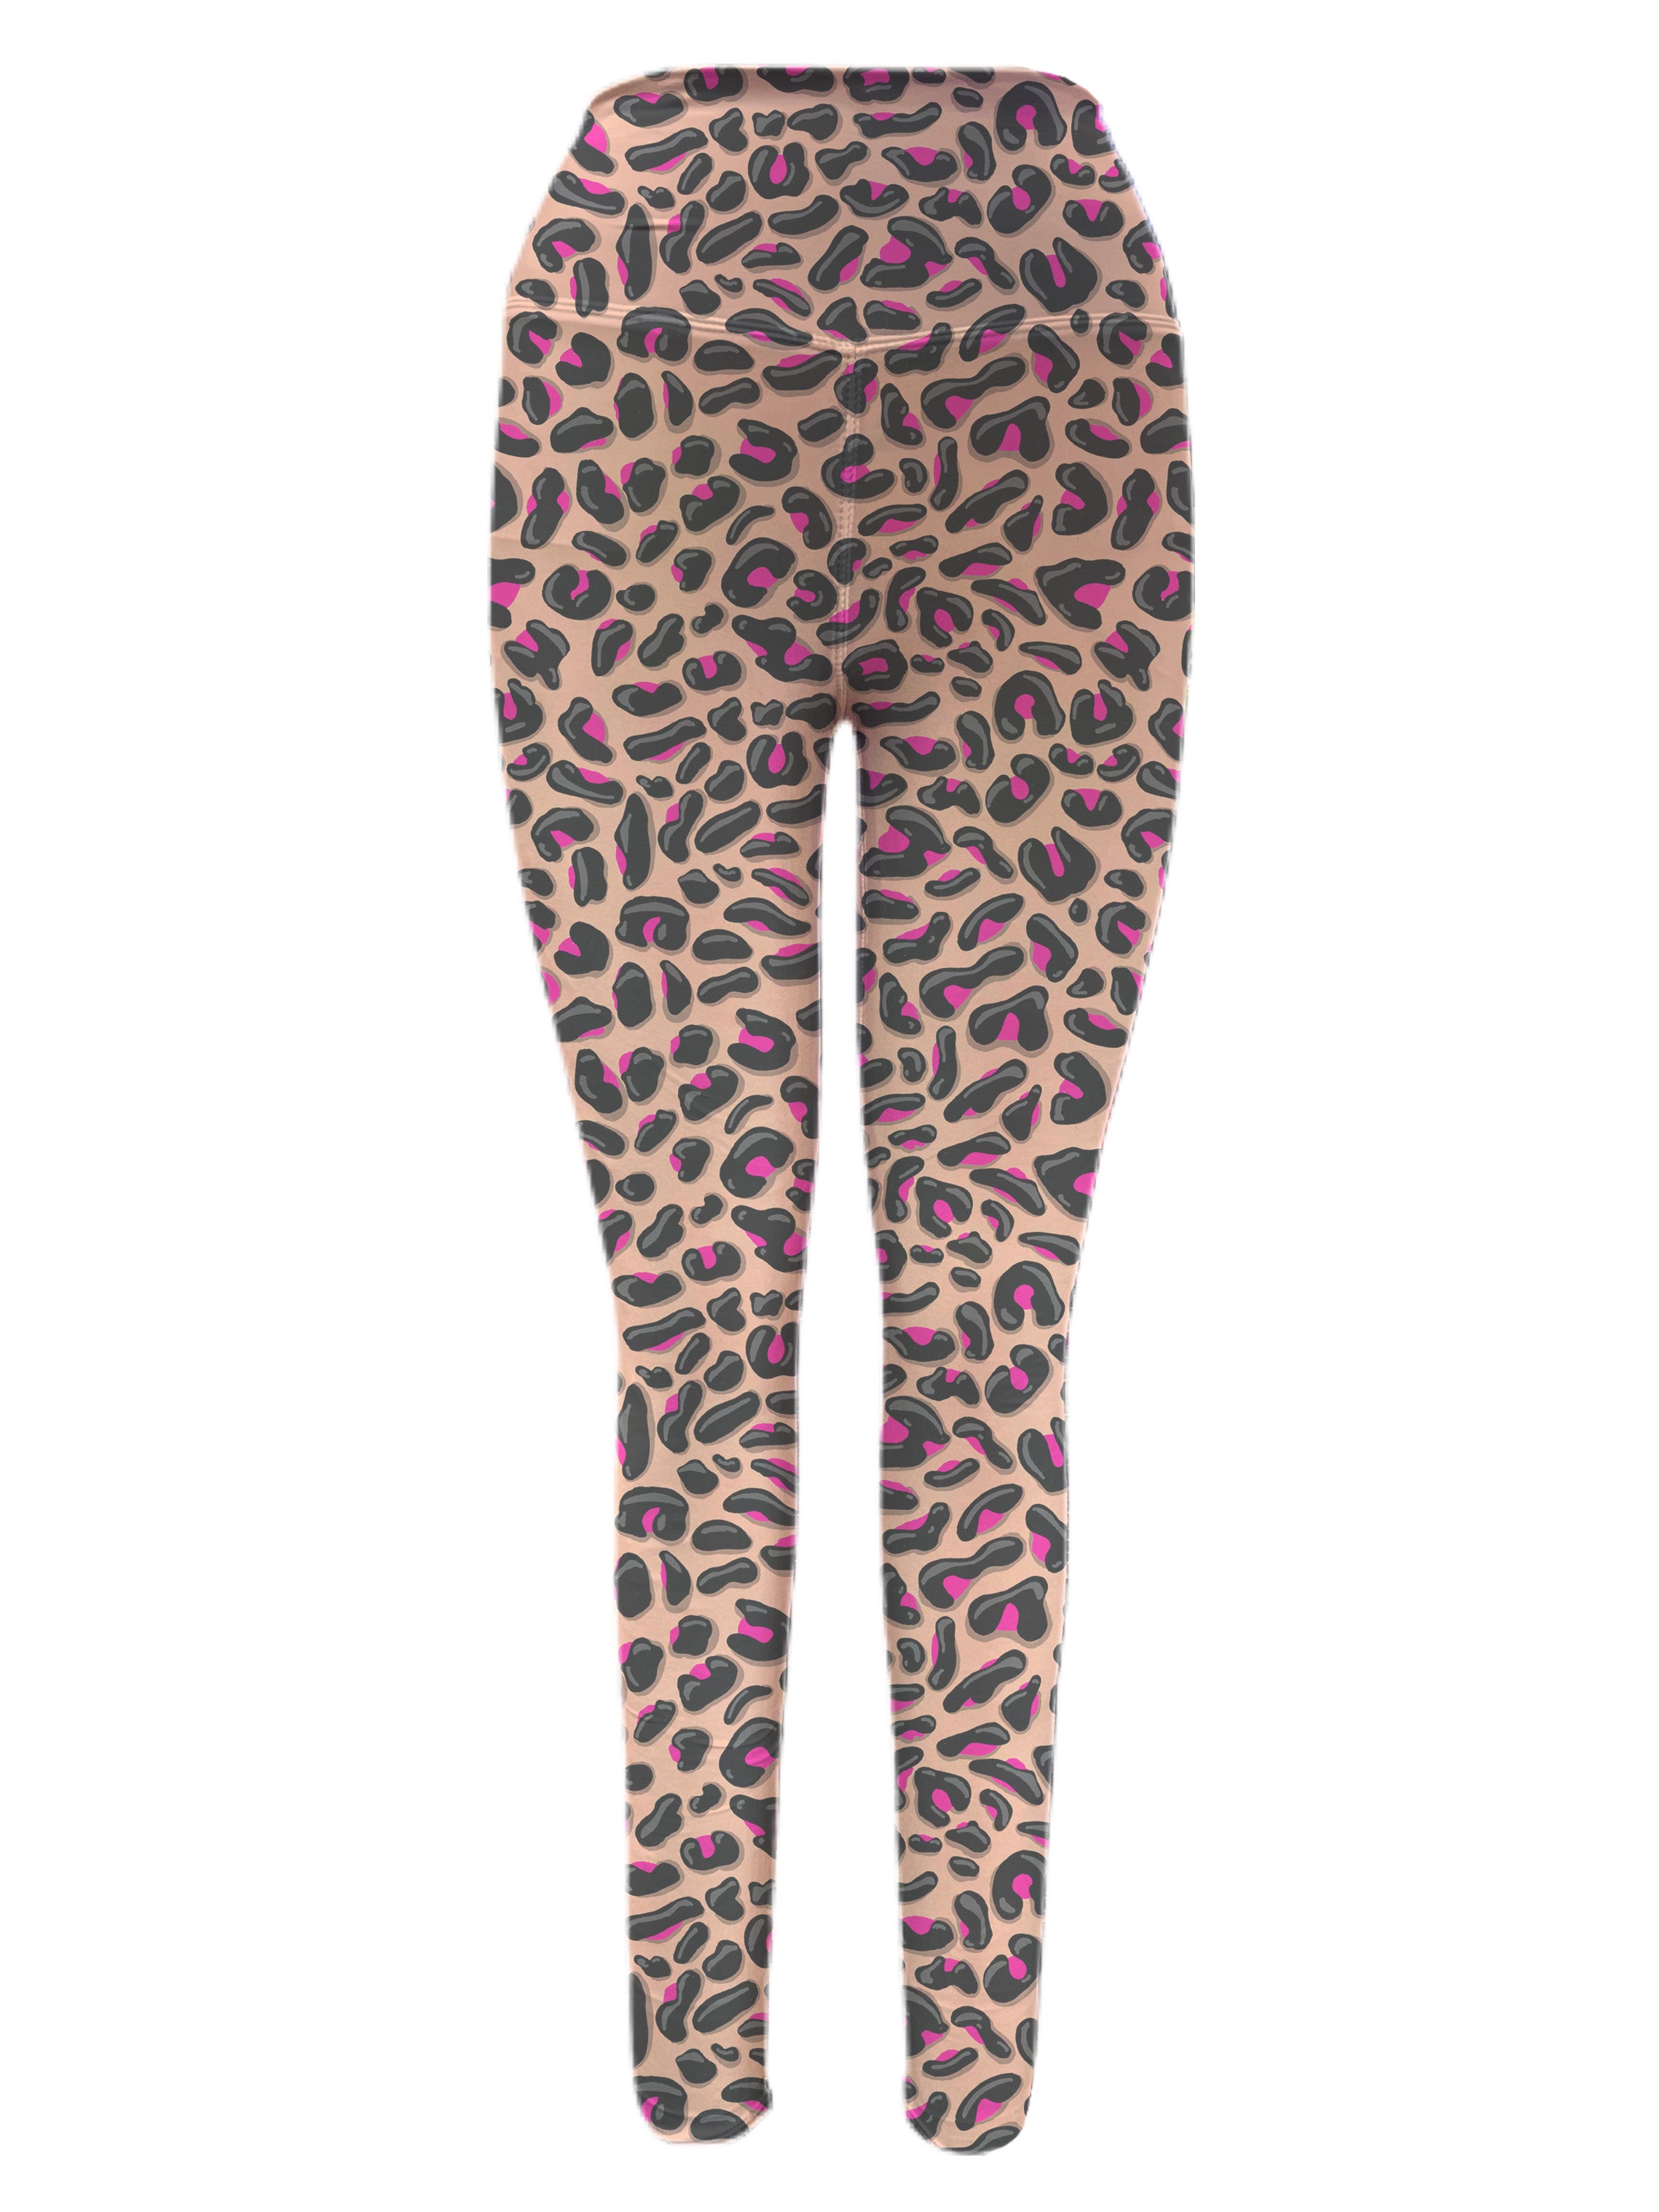 Torrid Leopard Print Multi Color Pink Leggings Size 2X Plus (2) (Plus) -  56% off